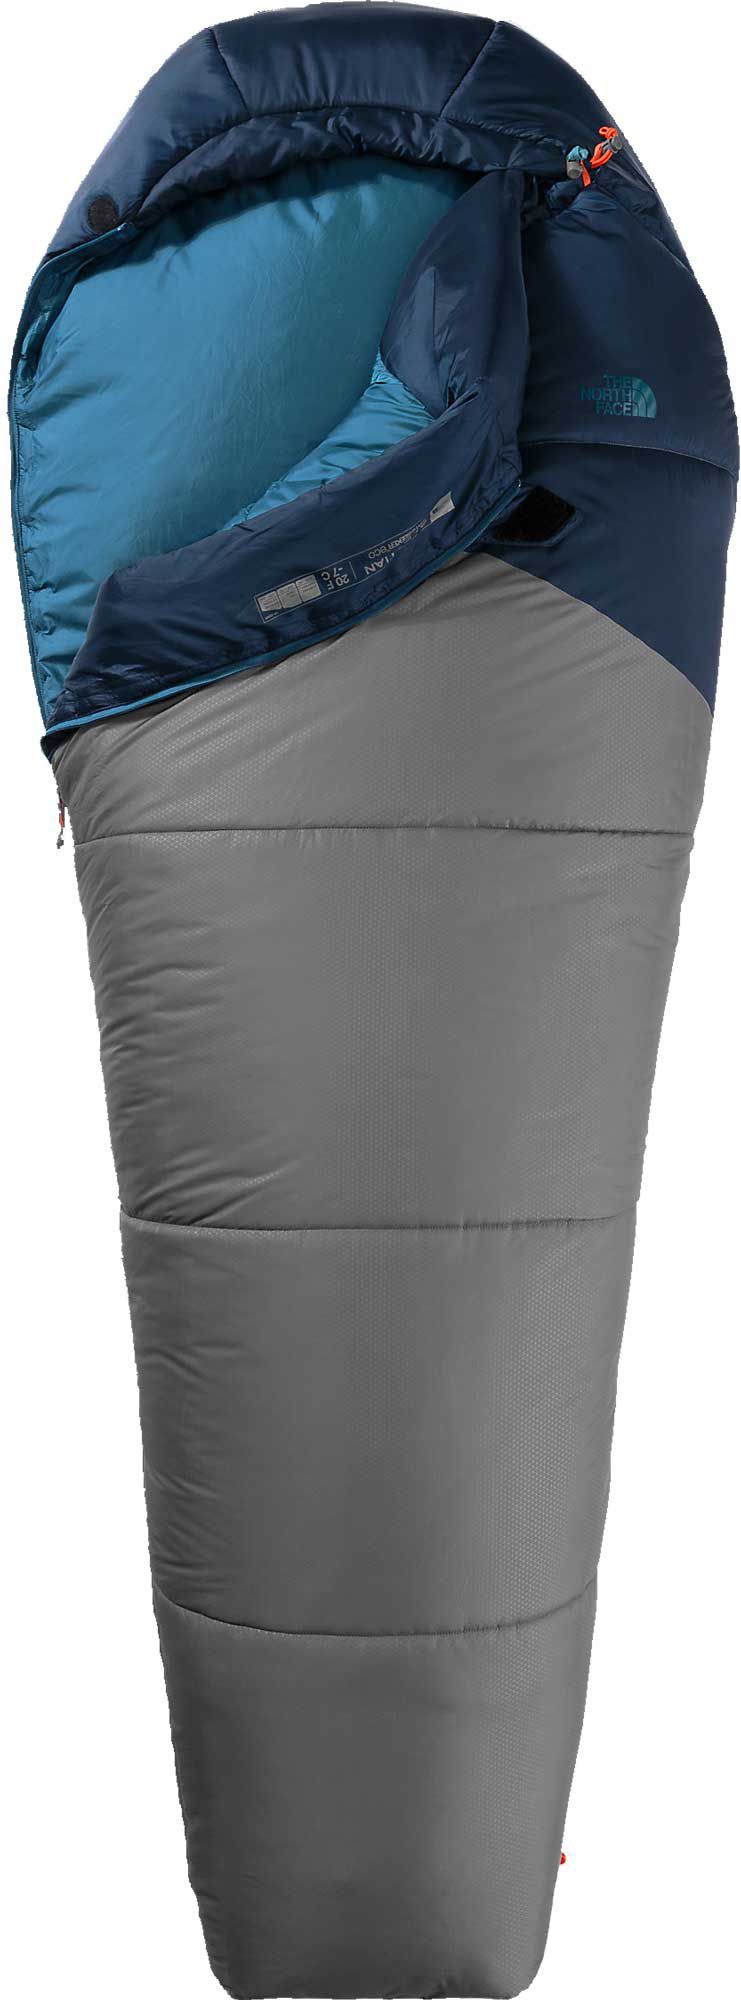 aleutian sleeping bag